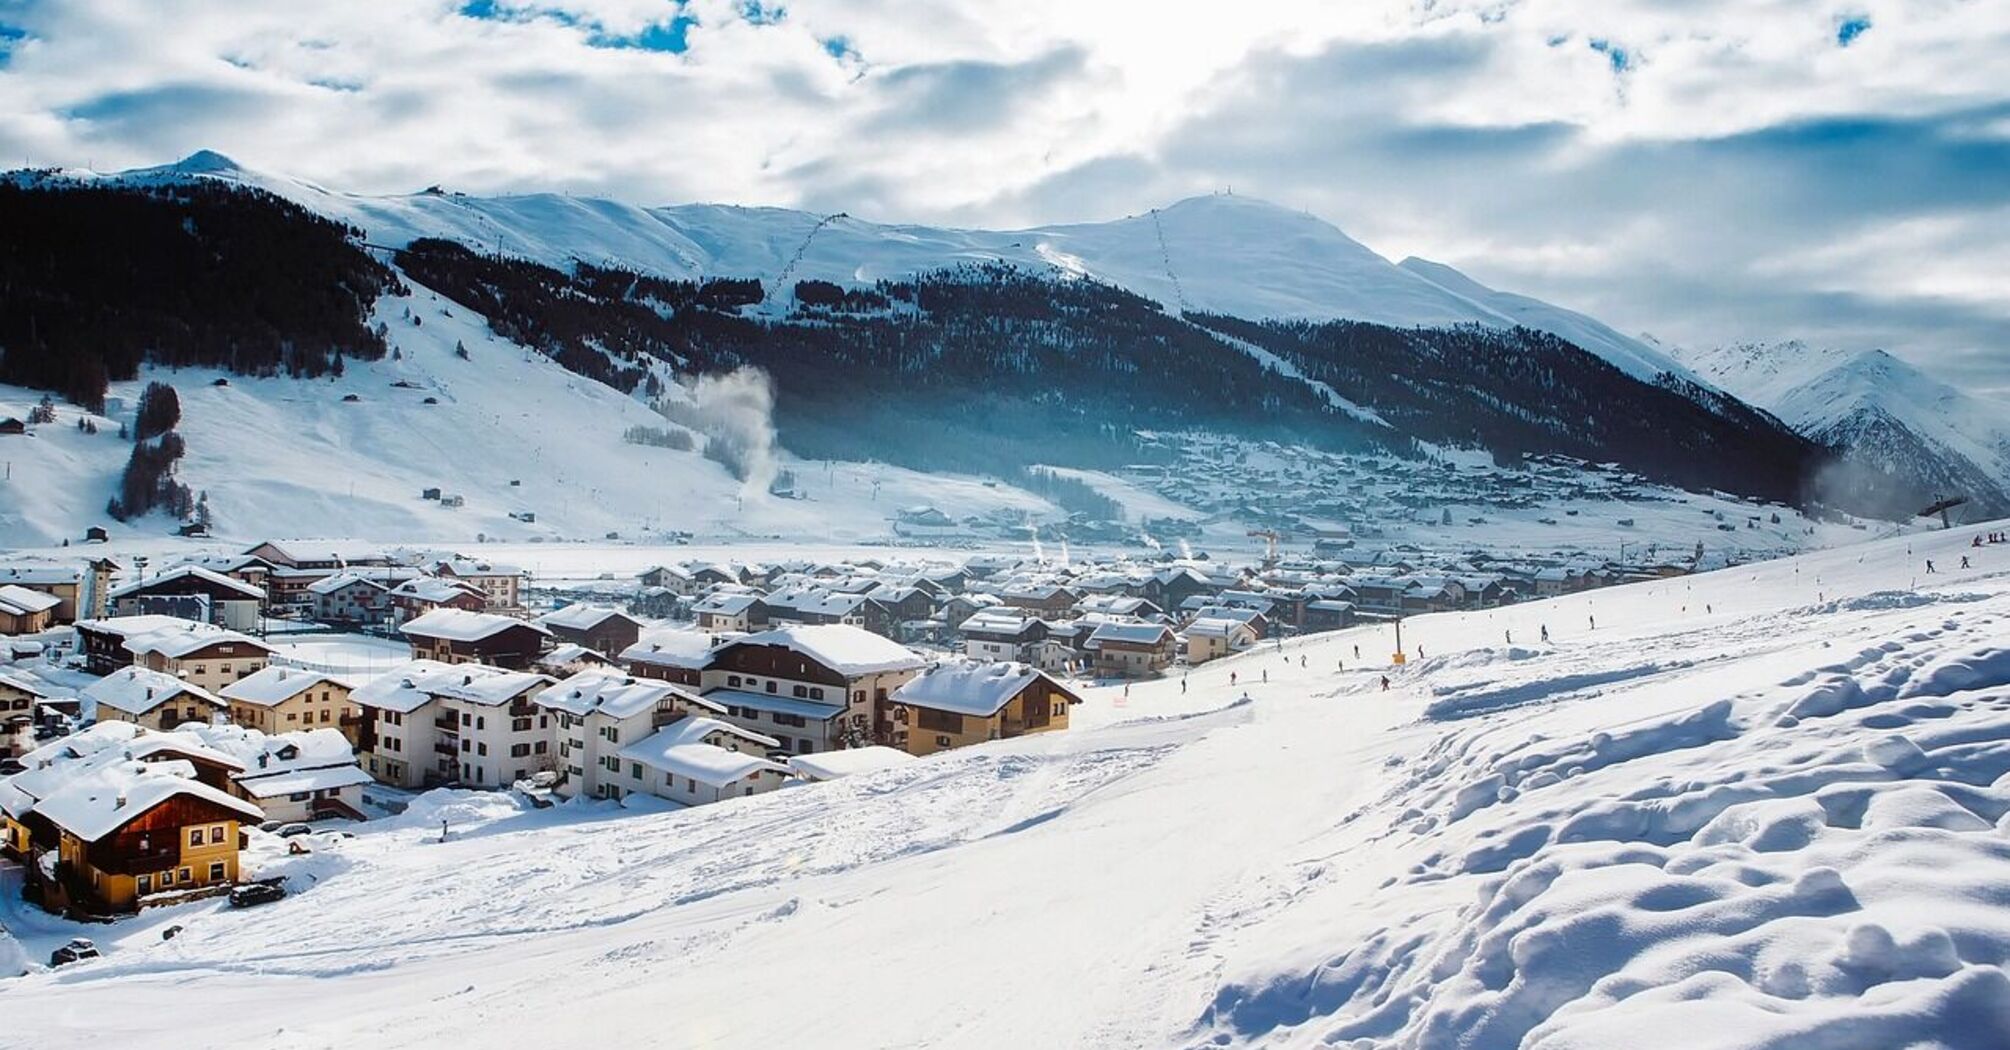 Top 14 ski resorts around the world: planning your winter vacation